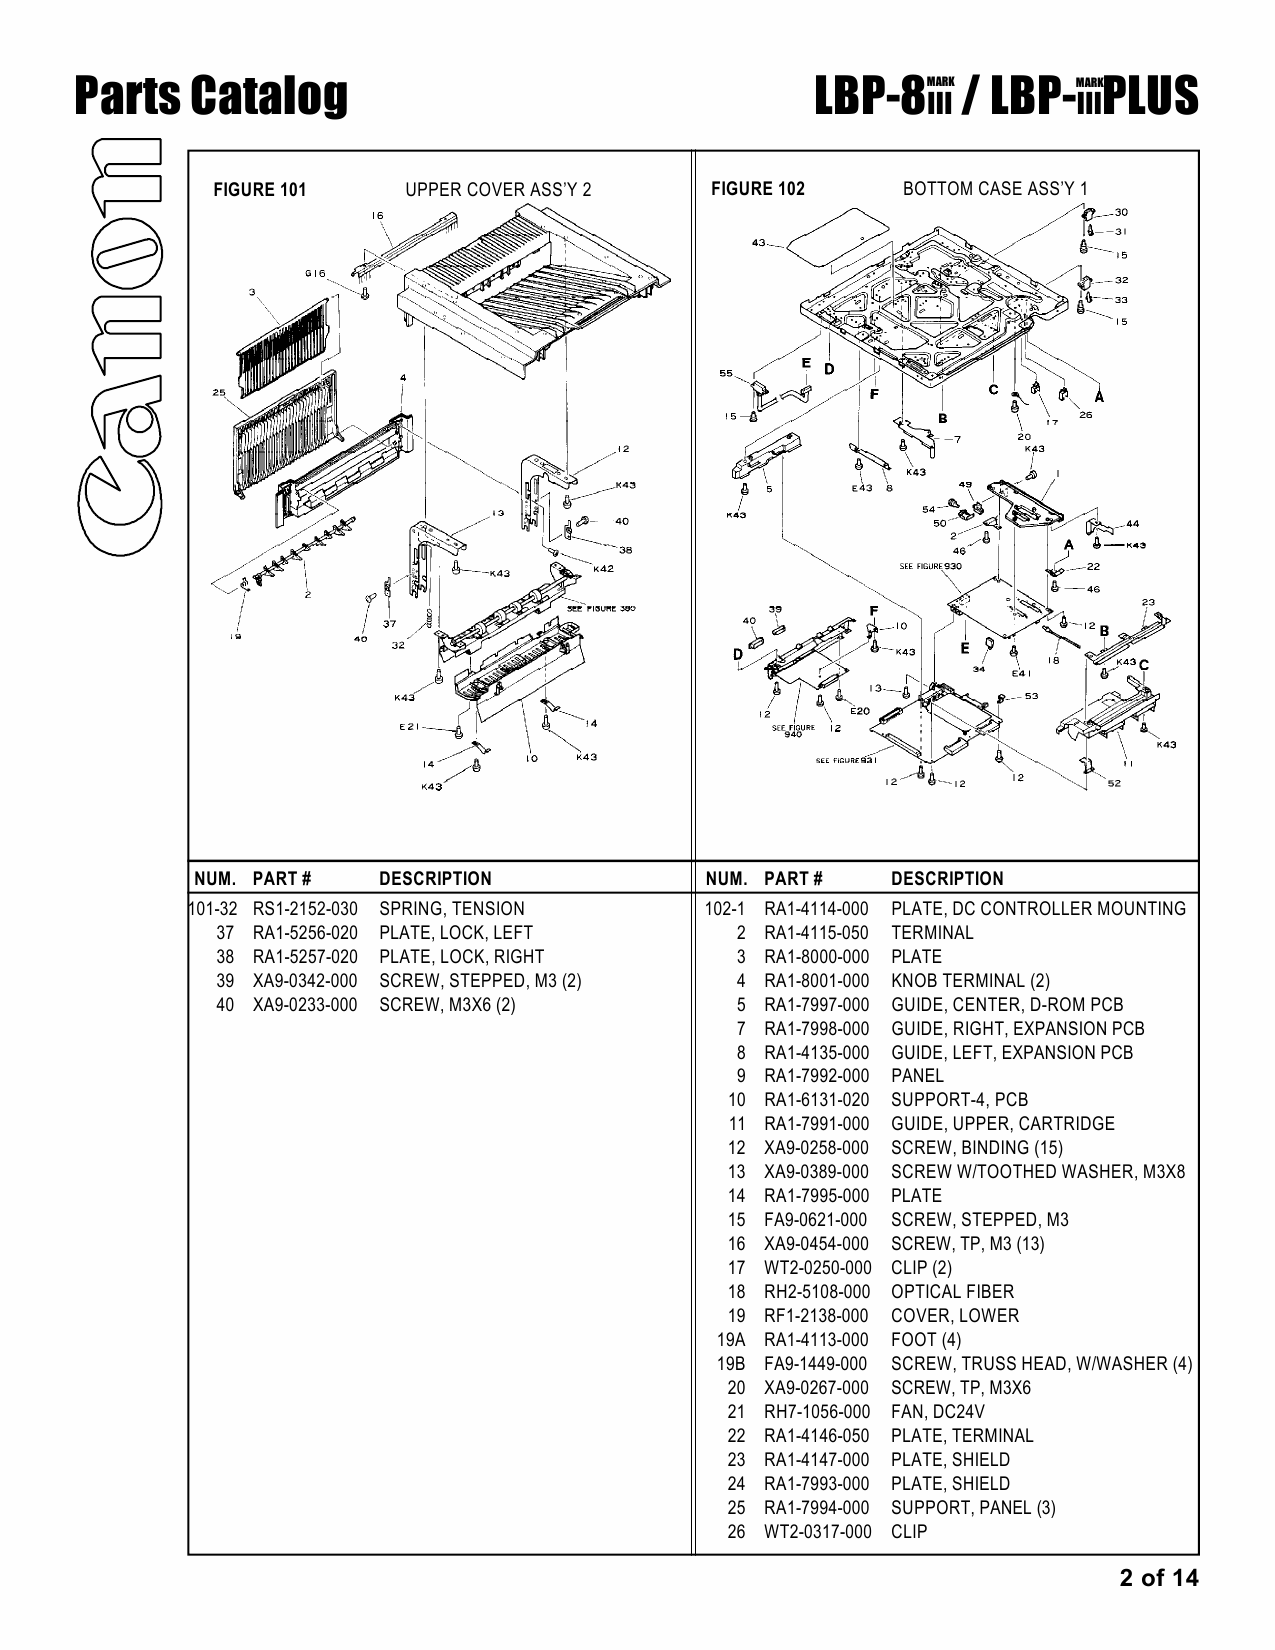 Canon imageCLASS LBP-8III 8IIIPlus Parts Catalog Manual-2